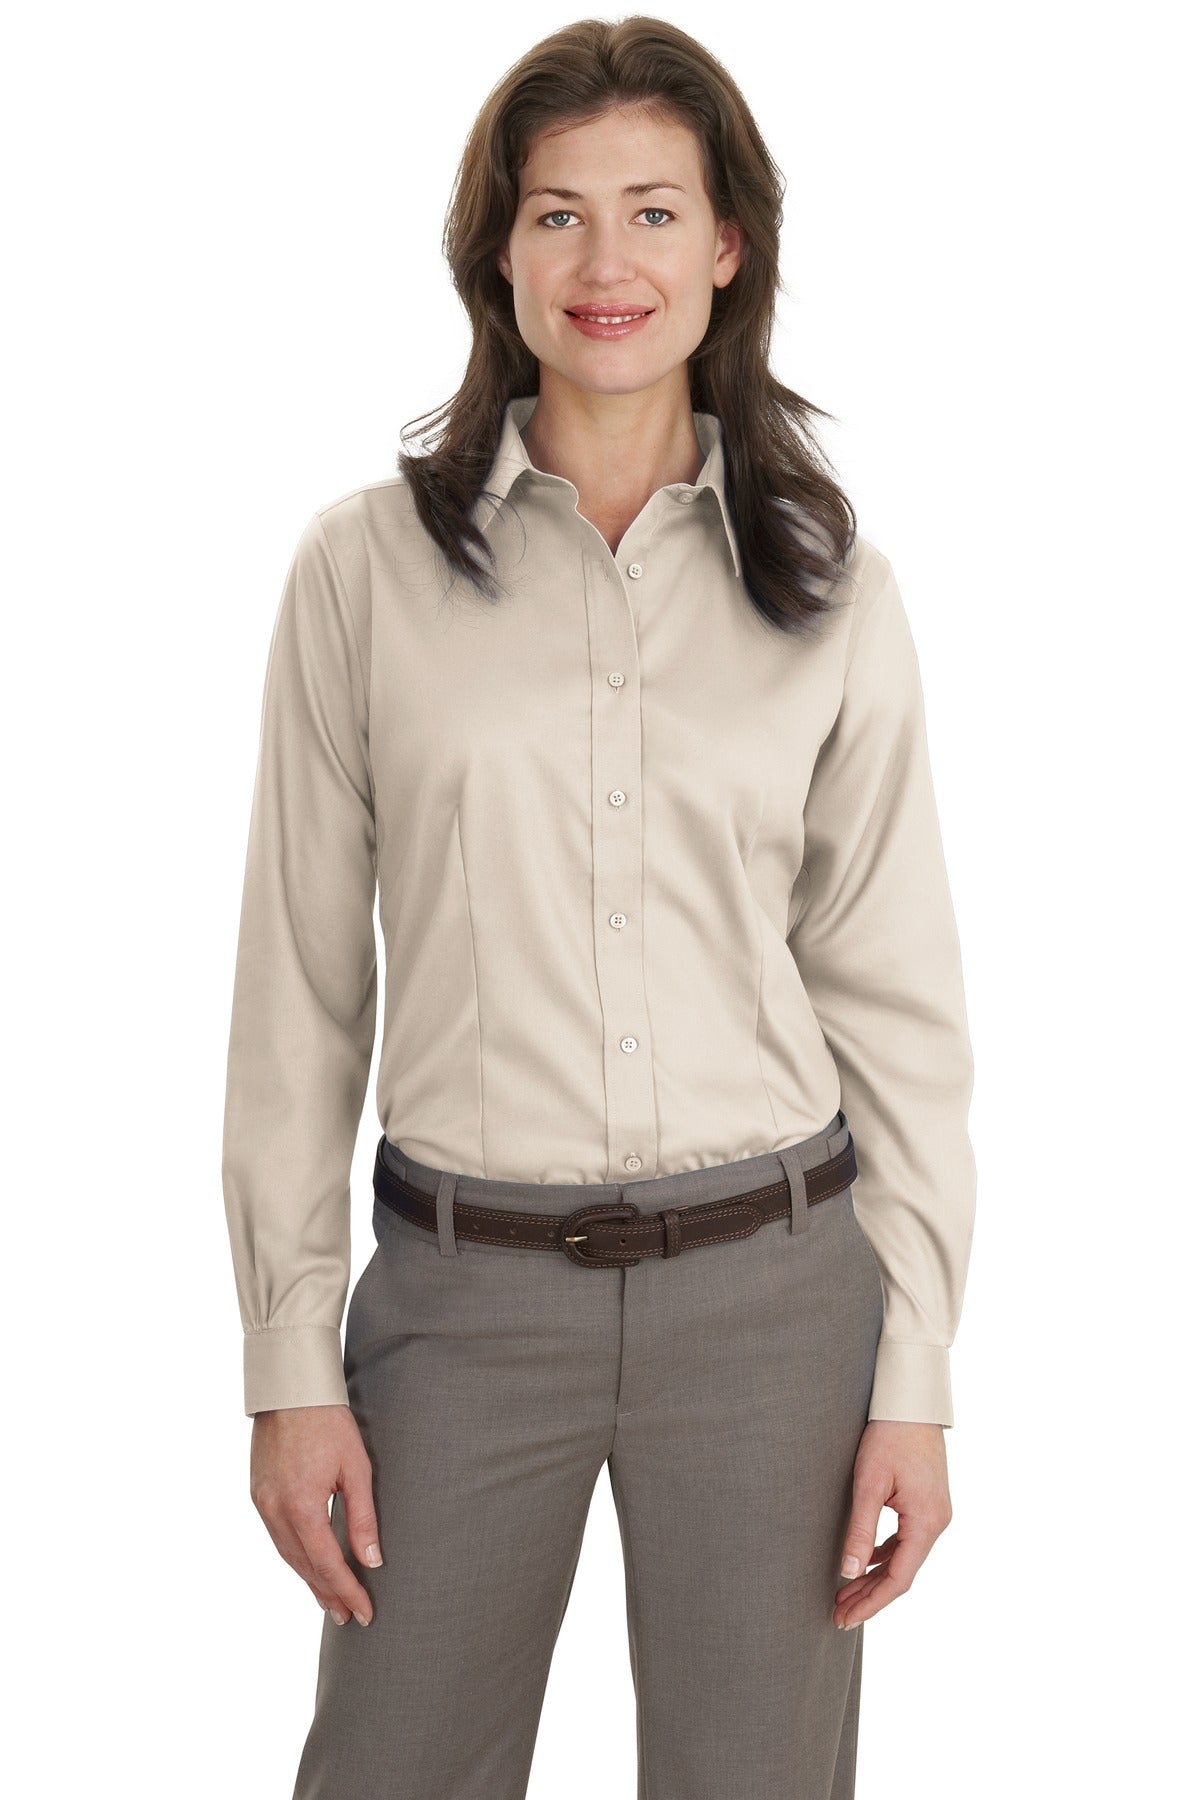 Port Authority Ladies Non-Iron Twill Shirt. L638